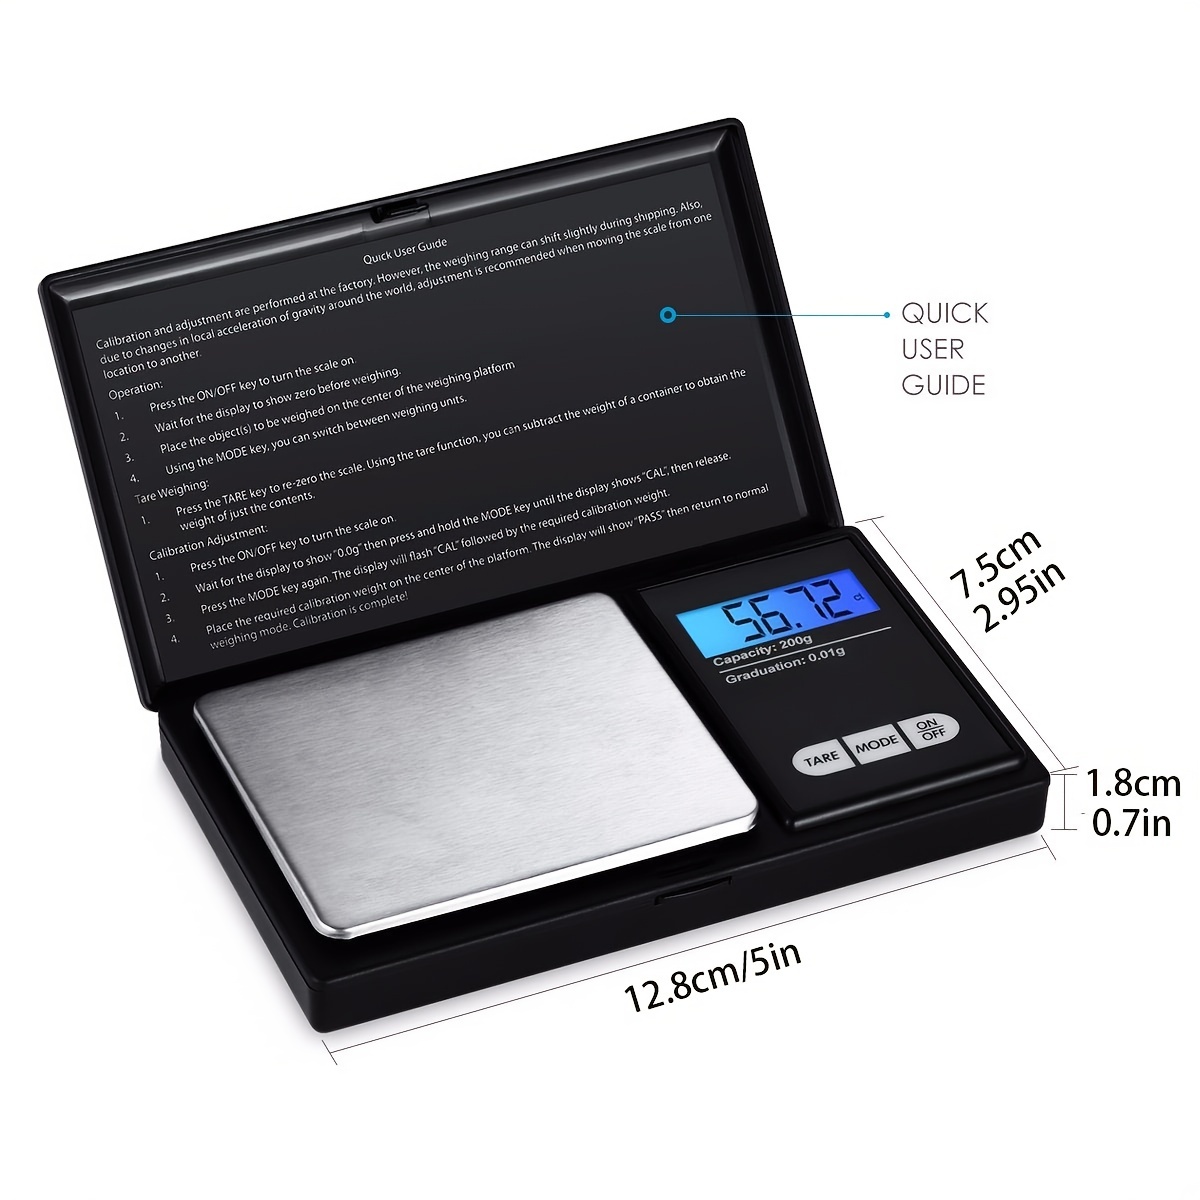 Báscula digital de cocina, báscula de joyería pequeña de 500 g/0